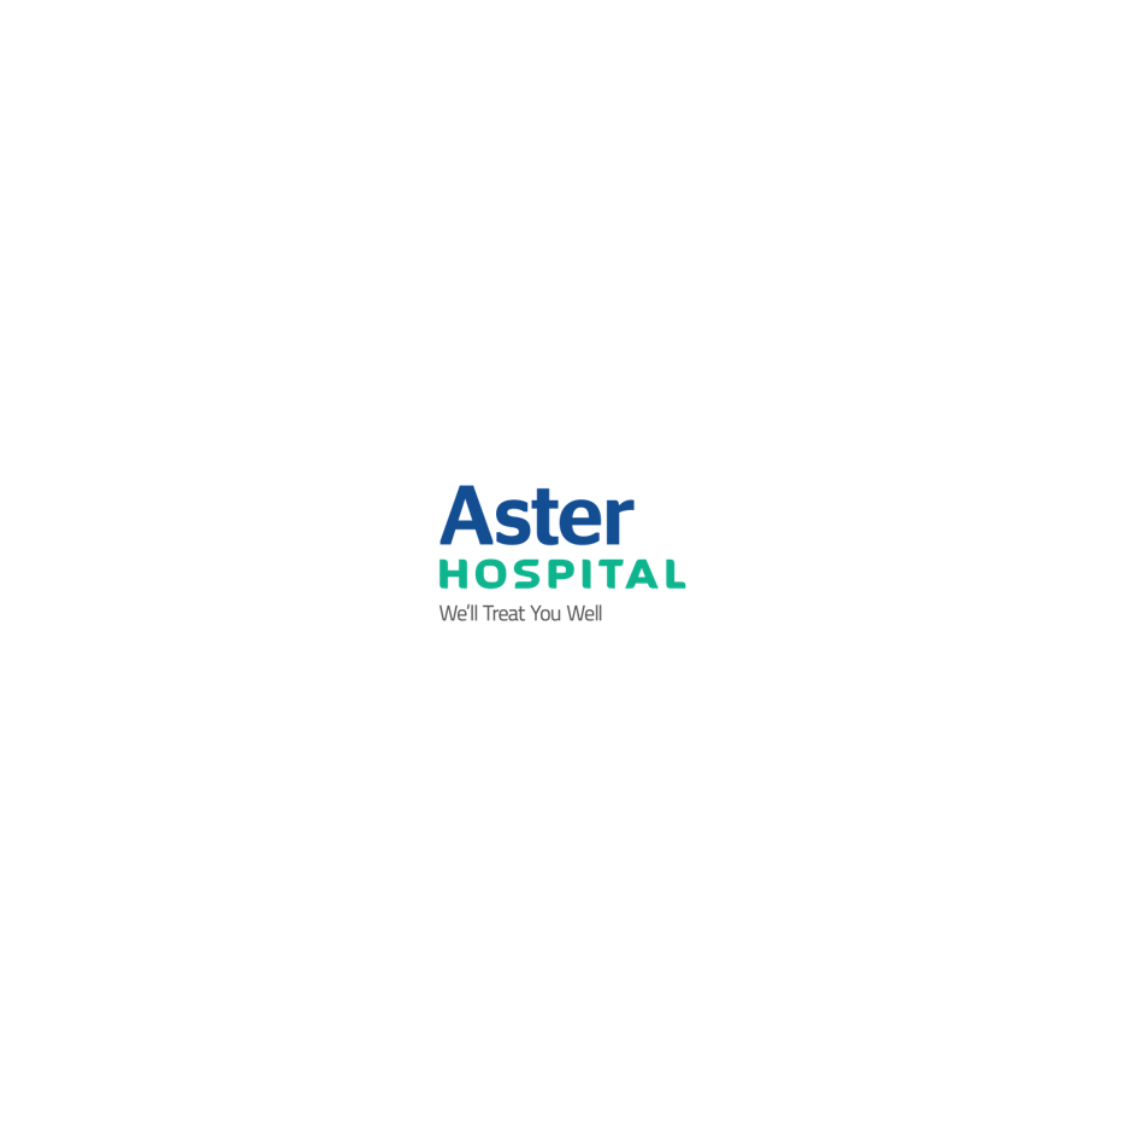 aster hospital logo